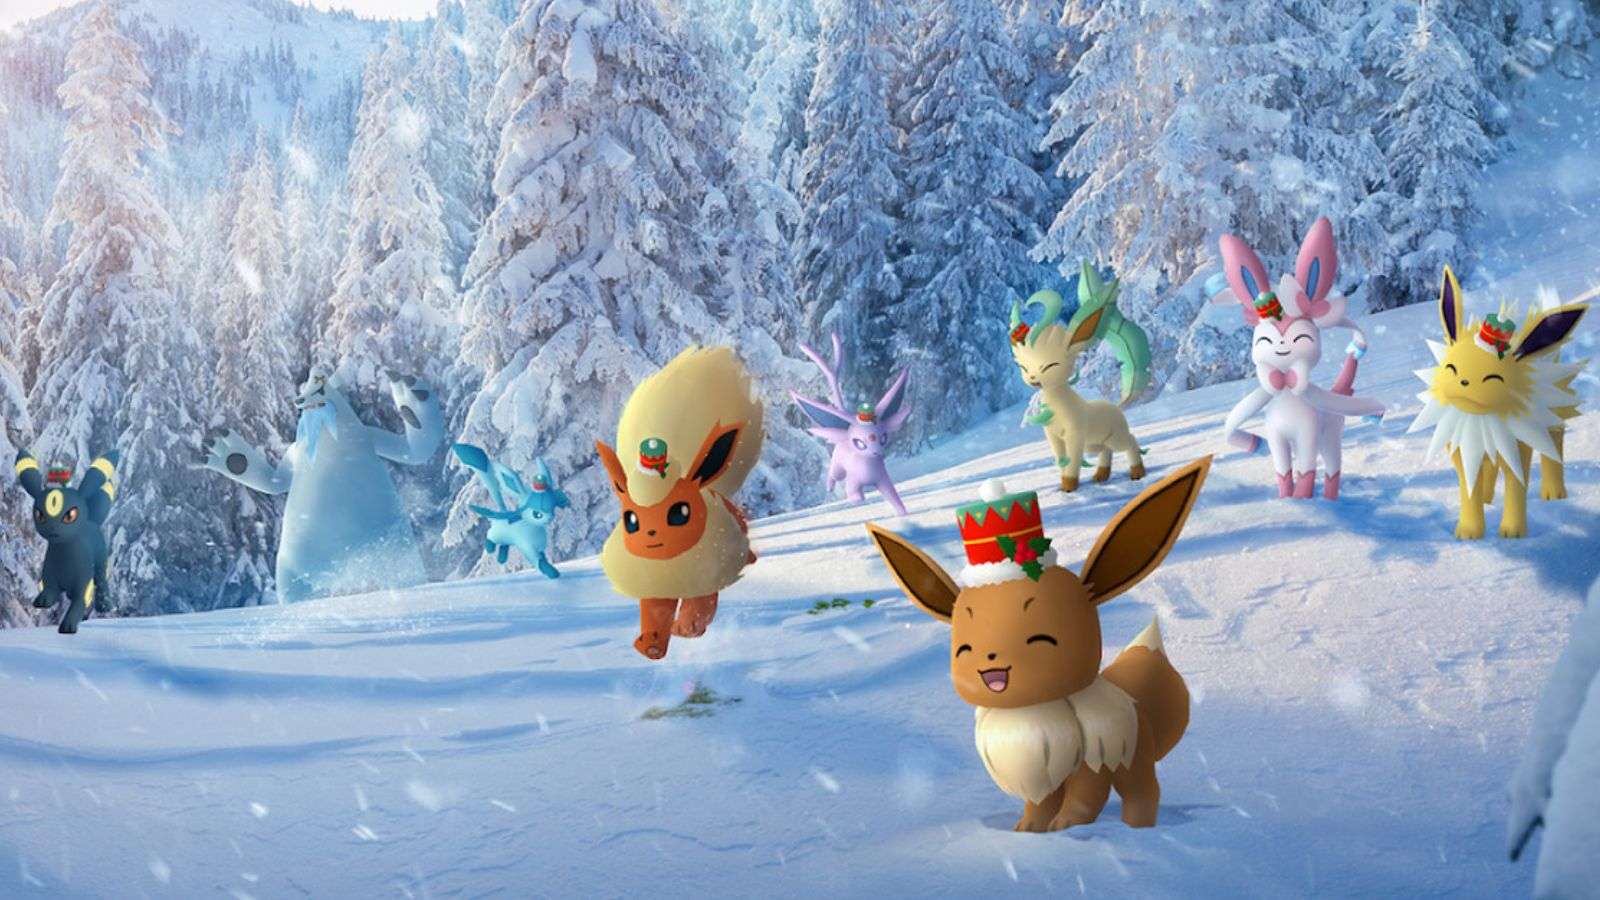 Pokemon Go players slam “misrepresentation” in Winter Wishes event - Dexerto